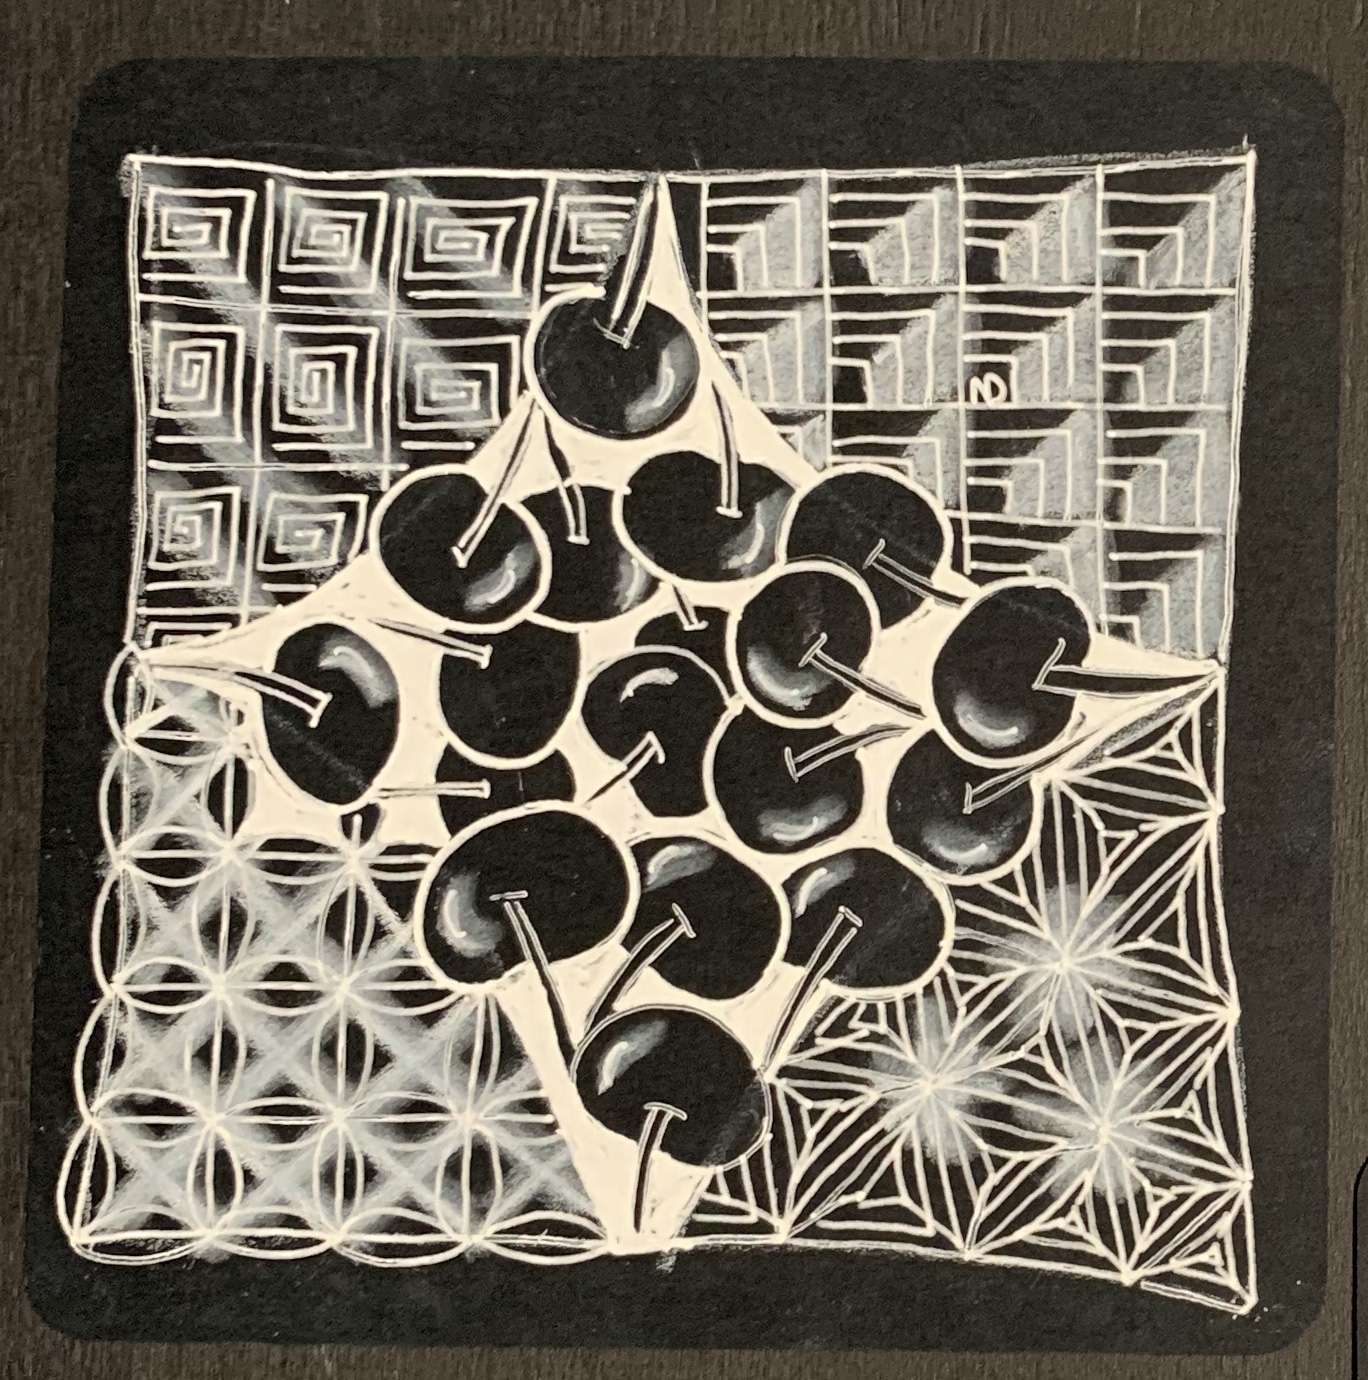 Everything Is Art: New Zentangle tile